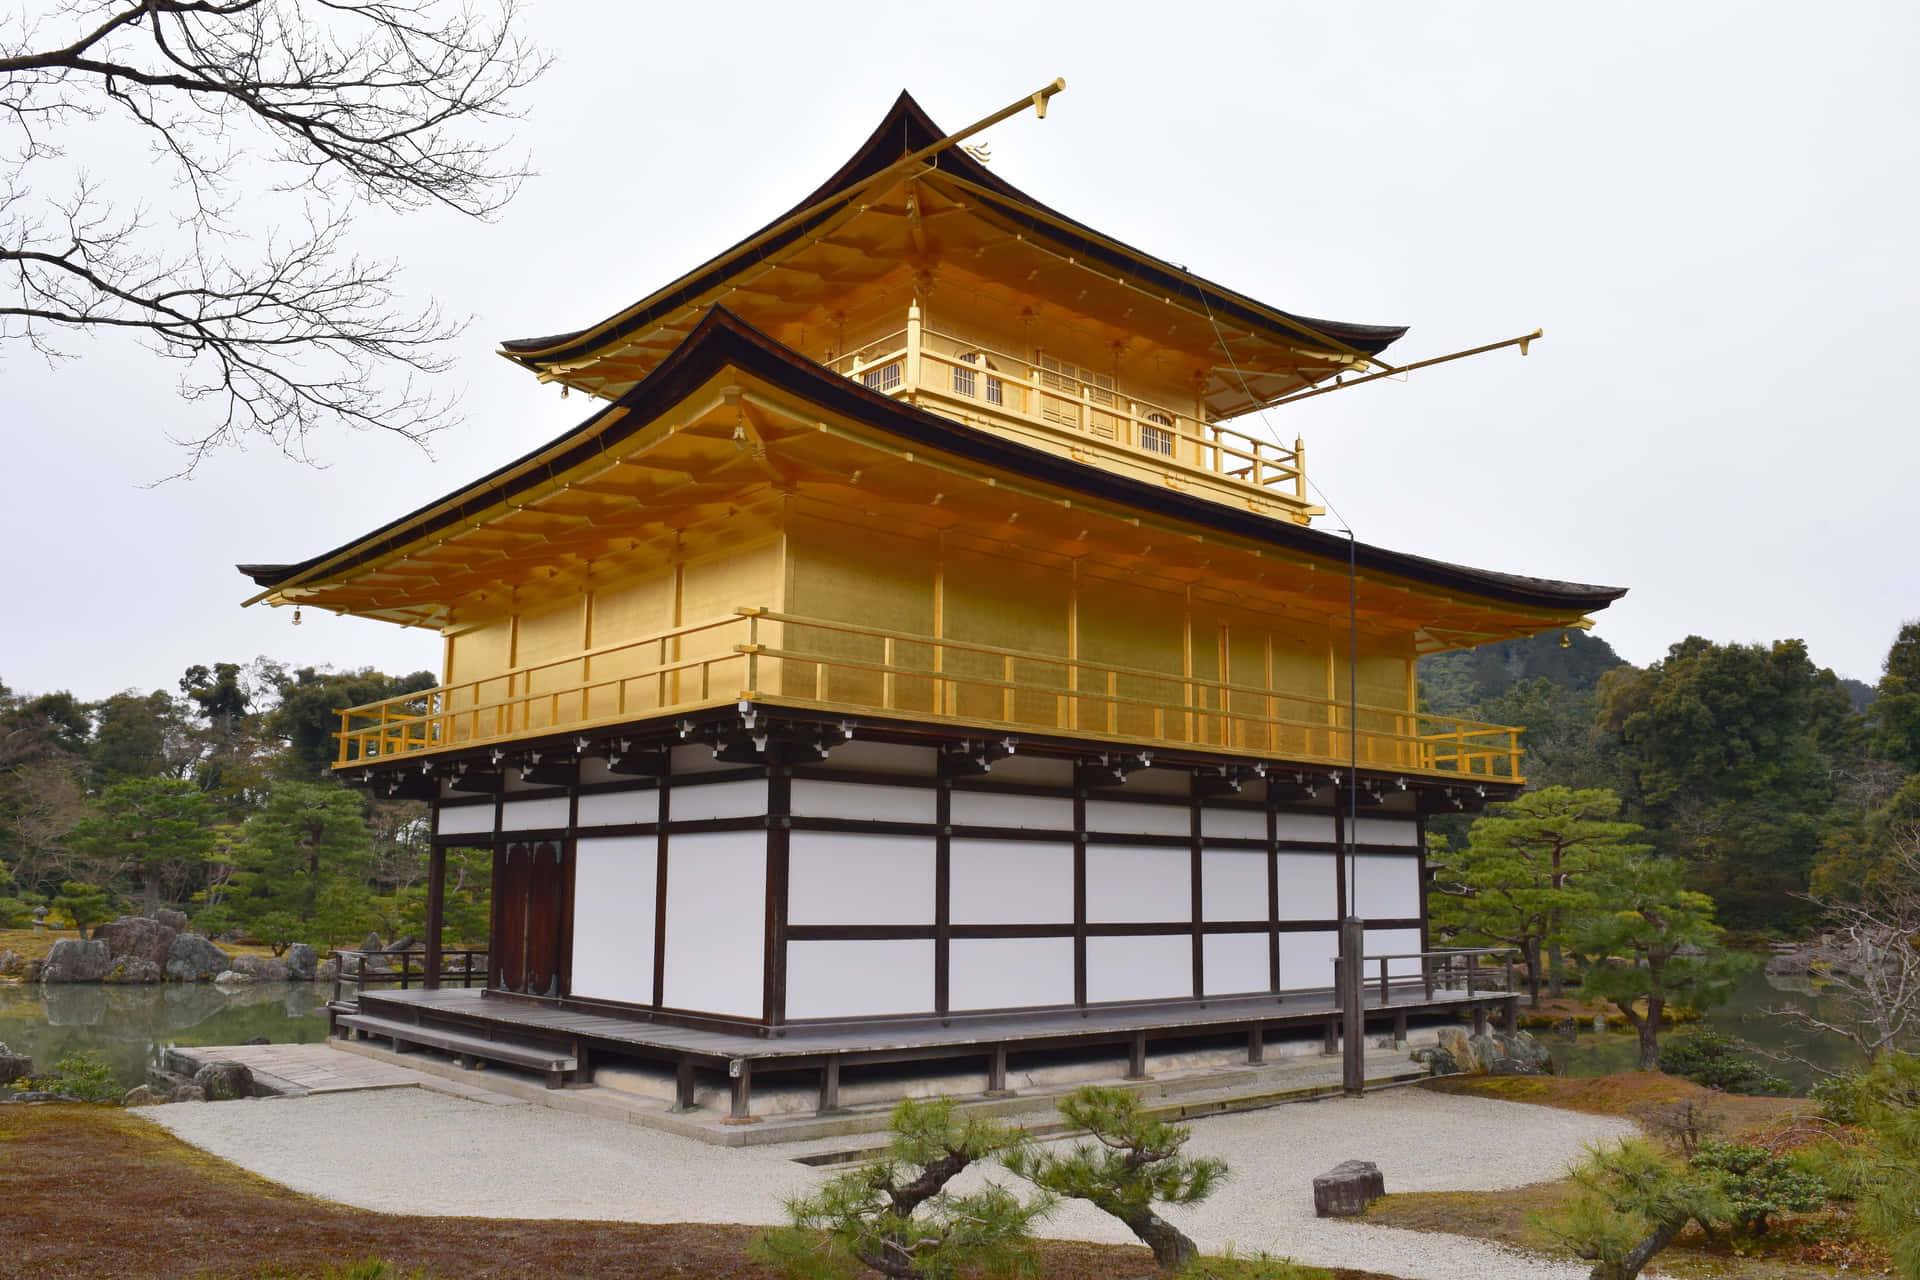 Caption: The Illuminated Golden Pavilion In Japan At Dusk Wallpaper